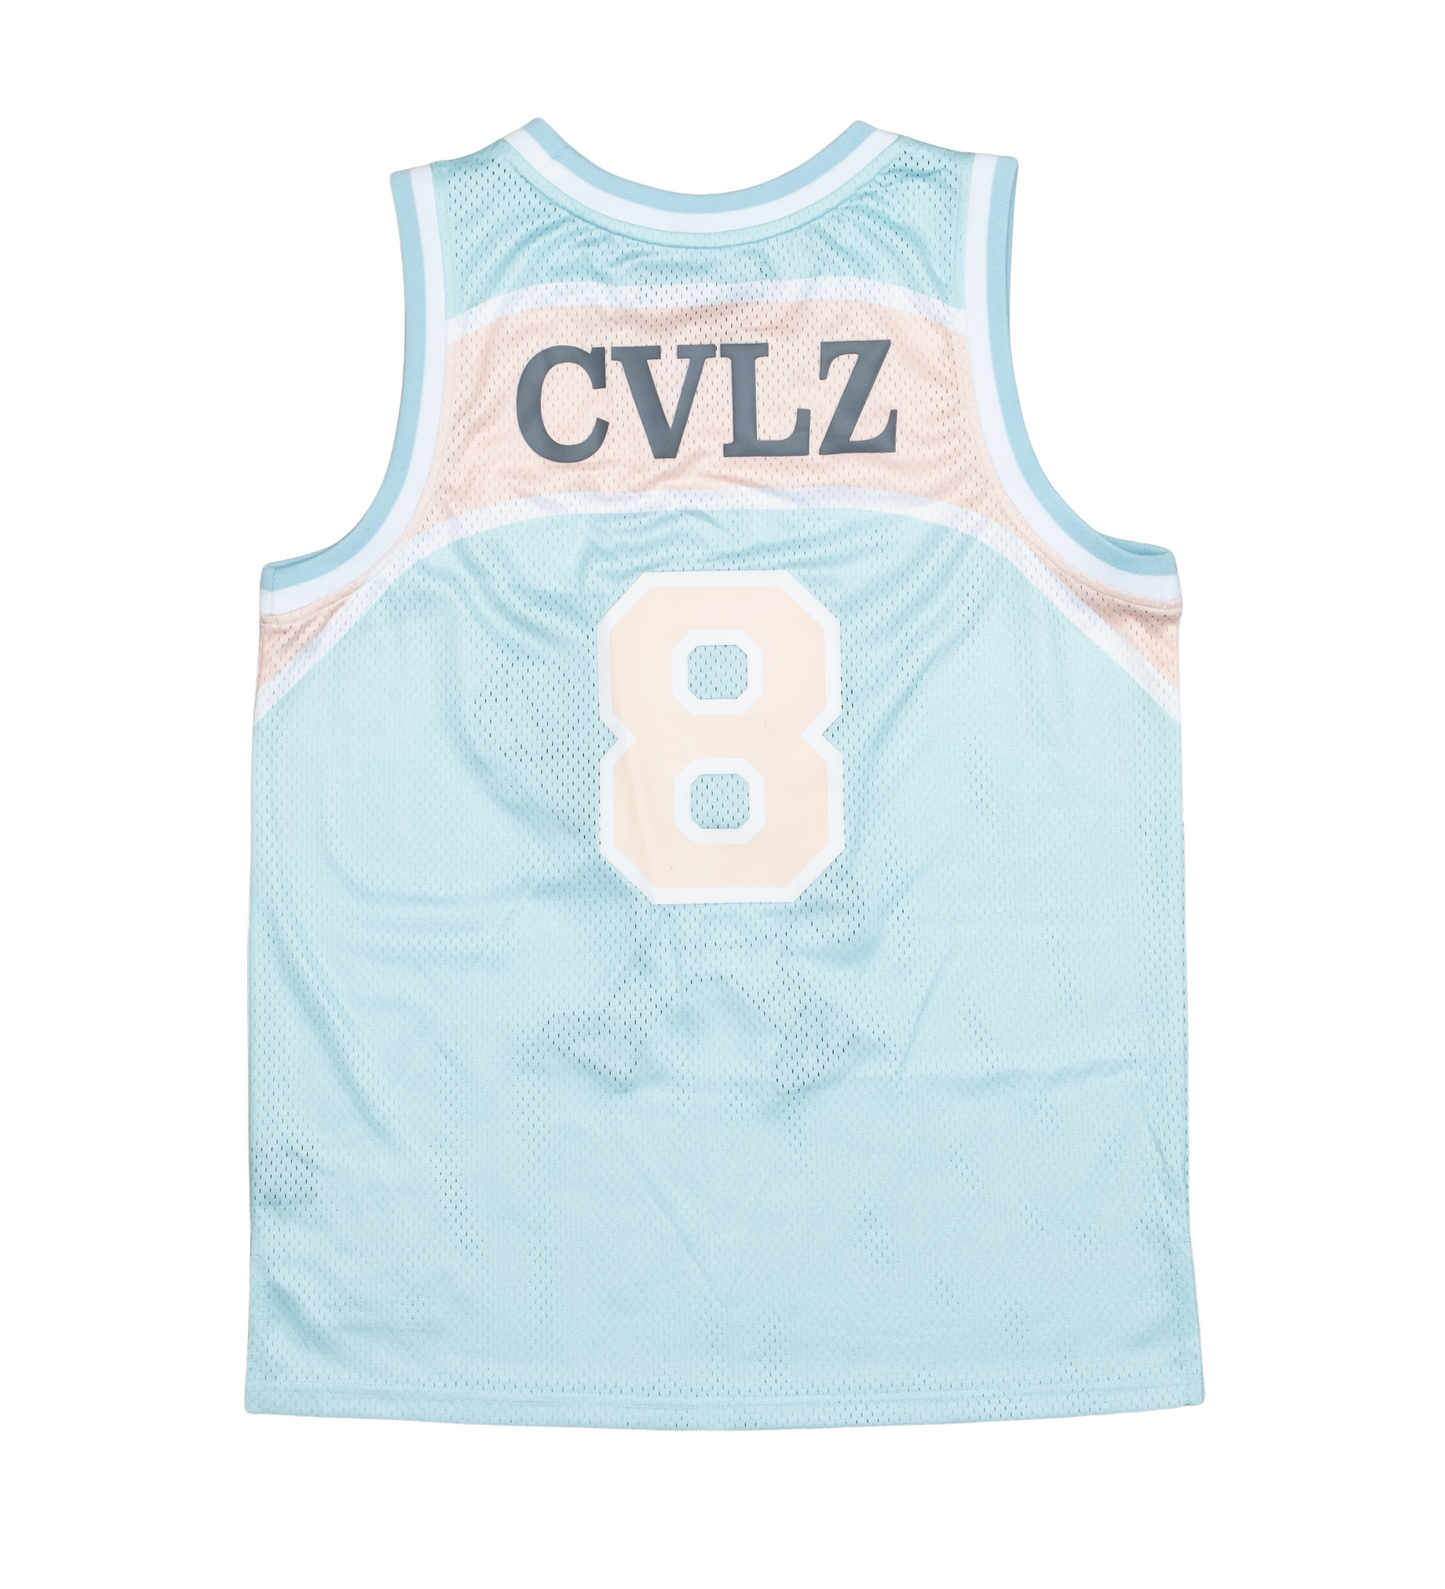 Civilized Basketball Jersey & Short Set